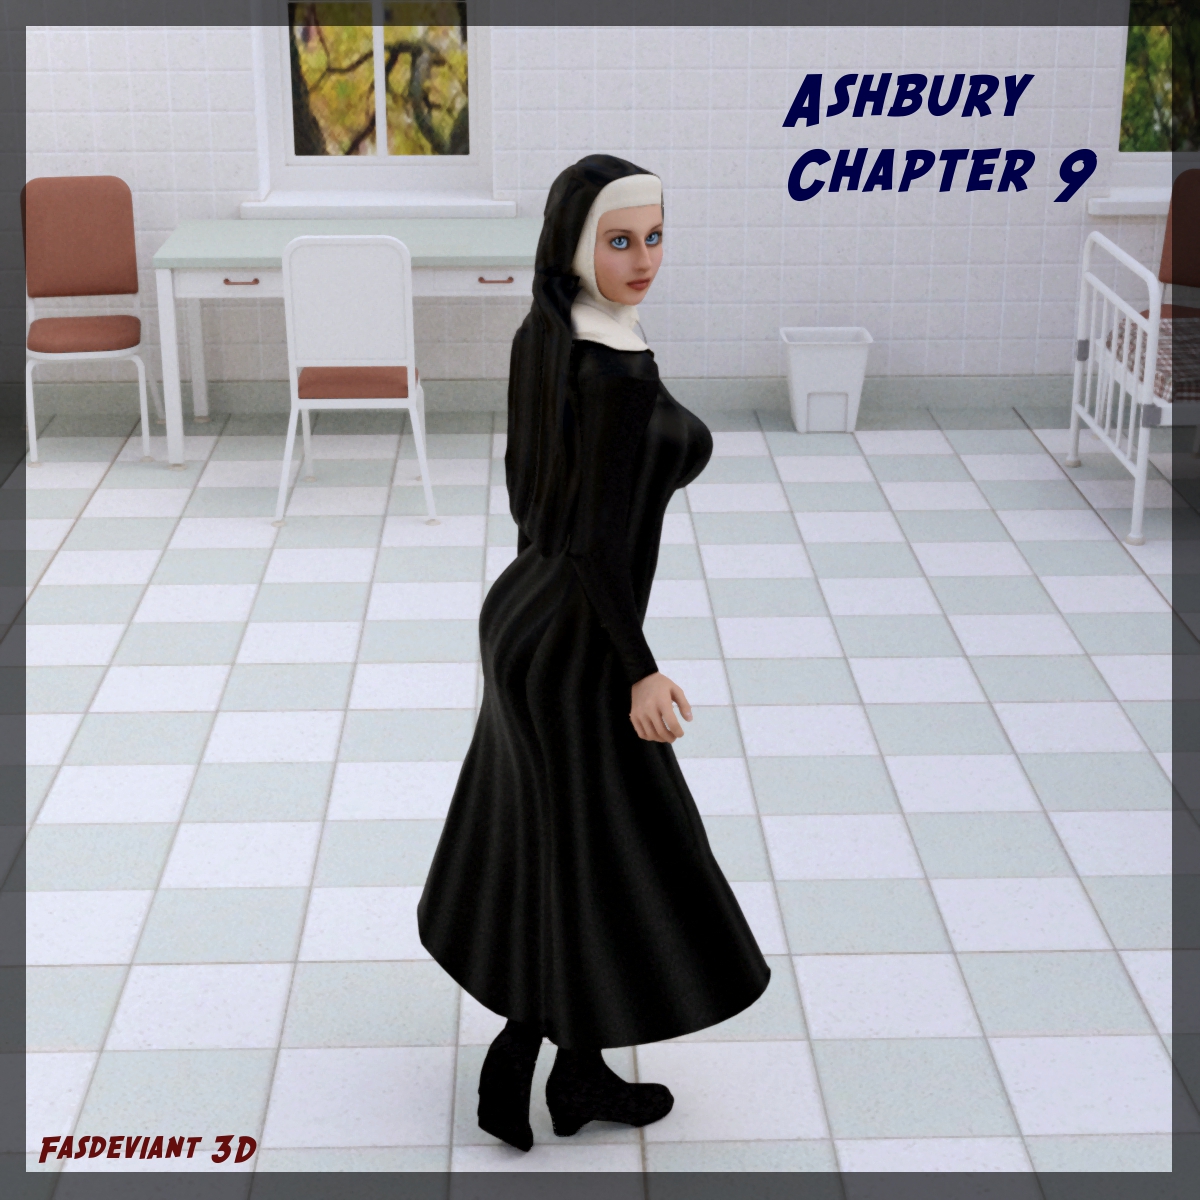 Fasdeviant Ashbury Chapter 9